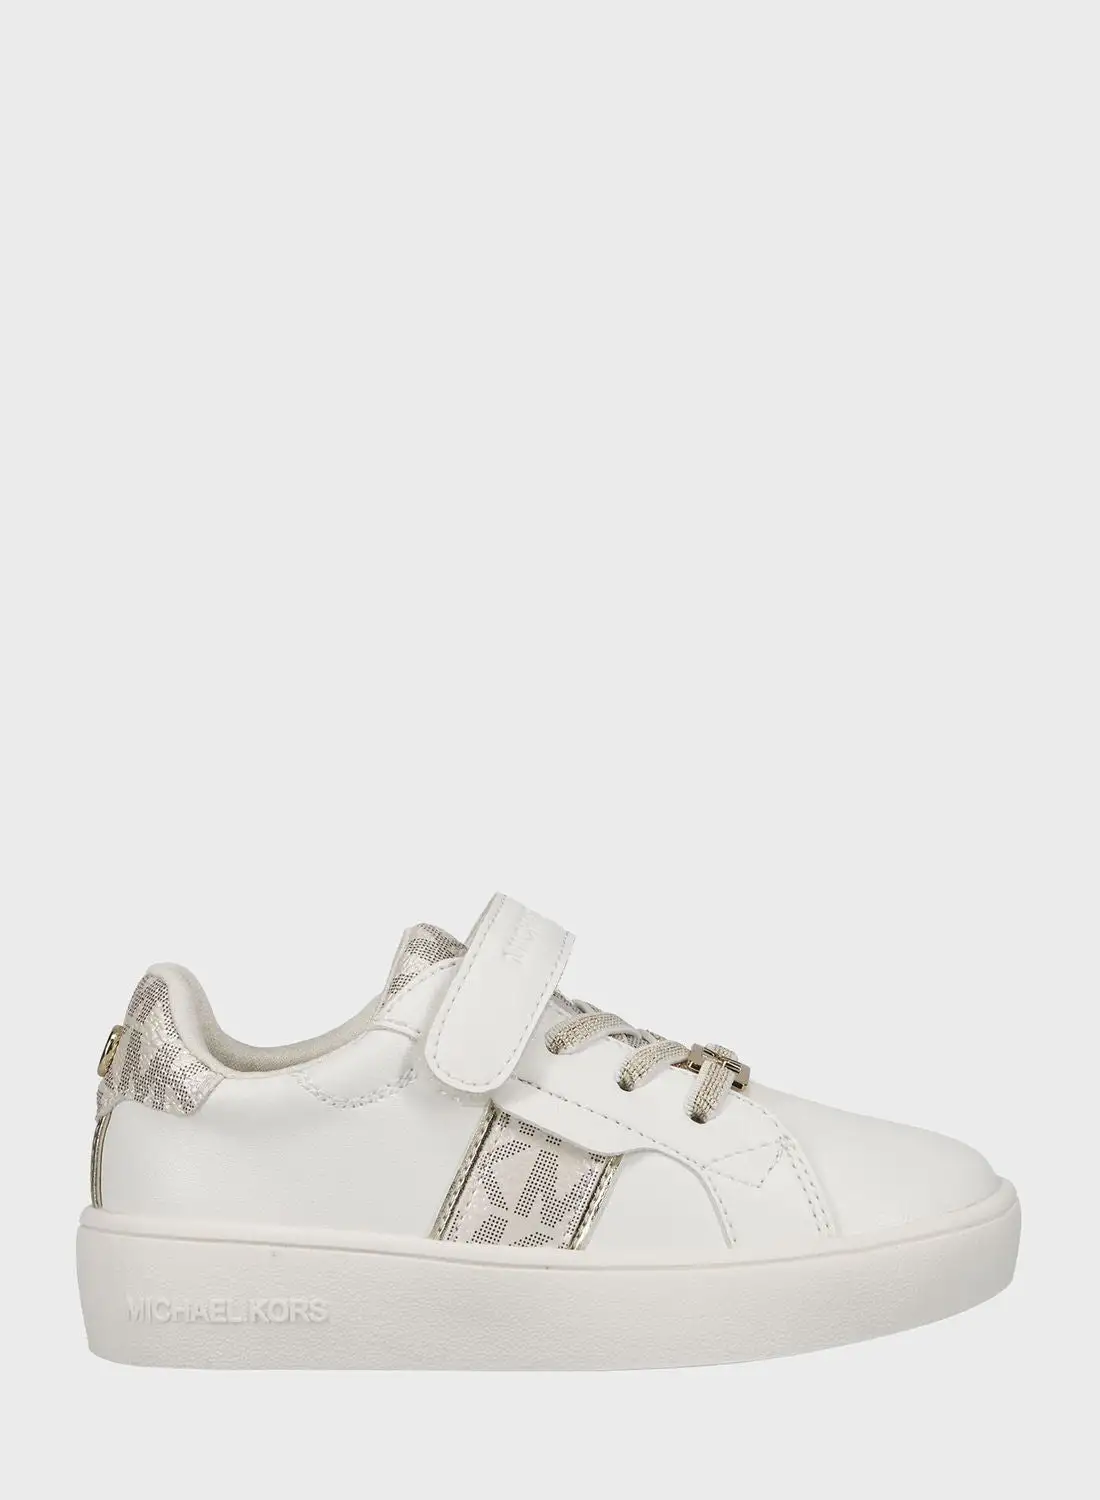 Michael Kors Kids Jem Maxine Ps Low Top Velcro Sneakers